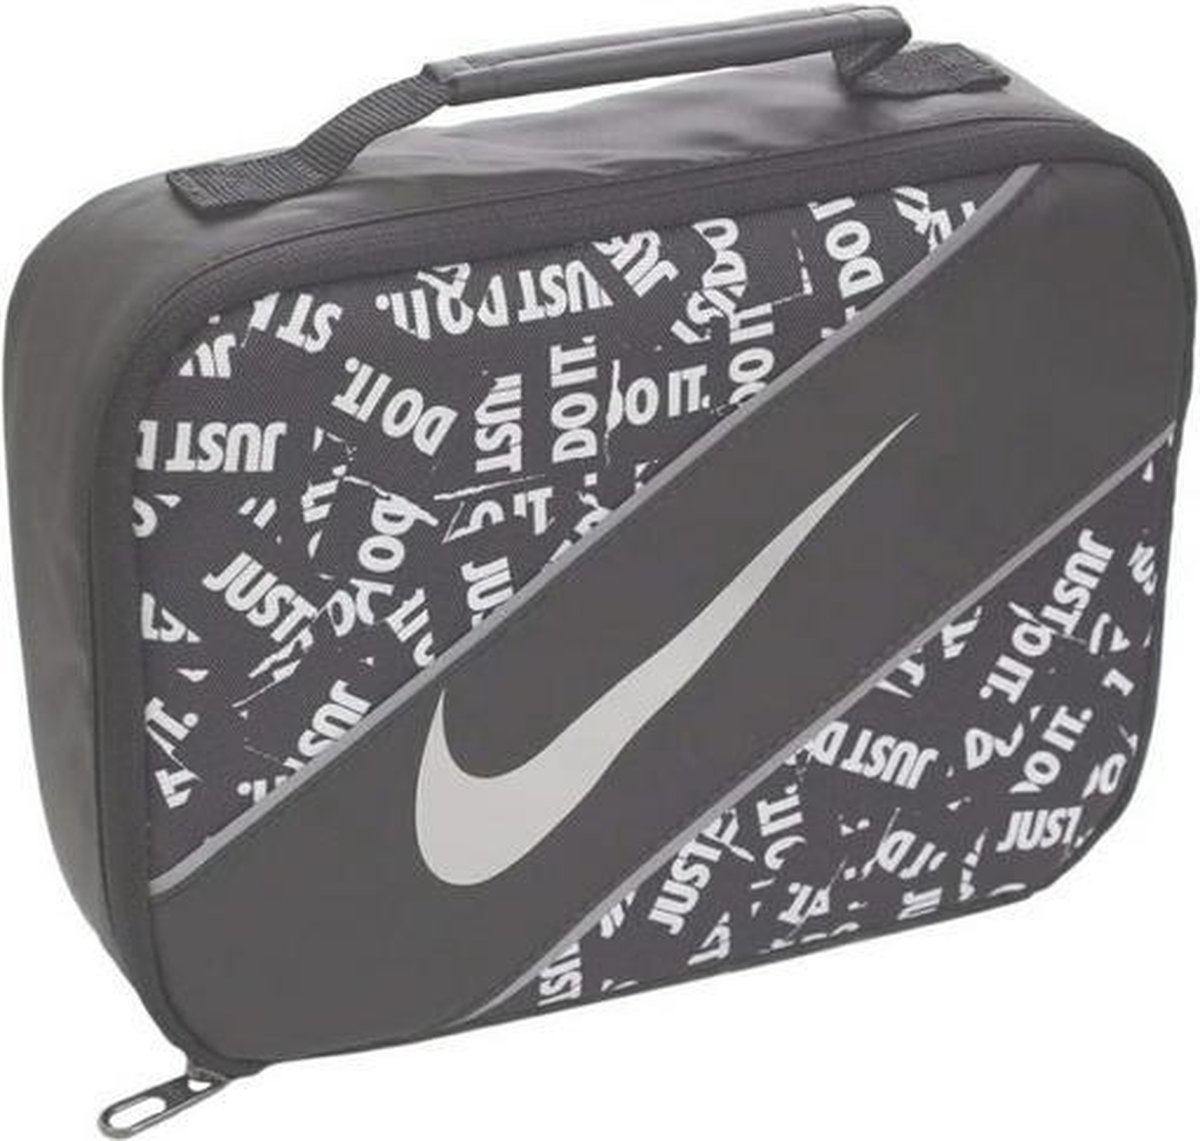 sac à lunch / trousse de toilette Nike | bol.com